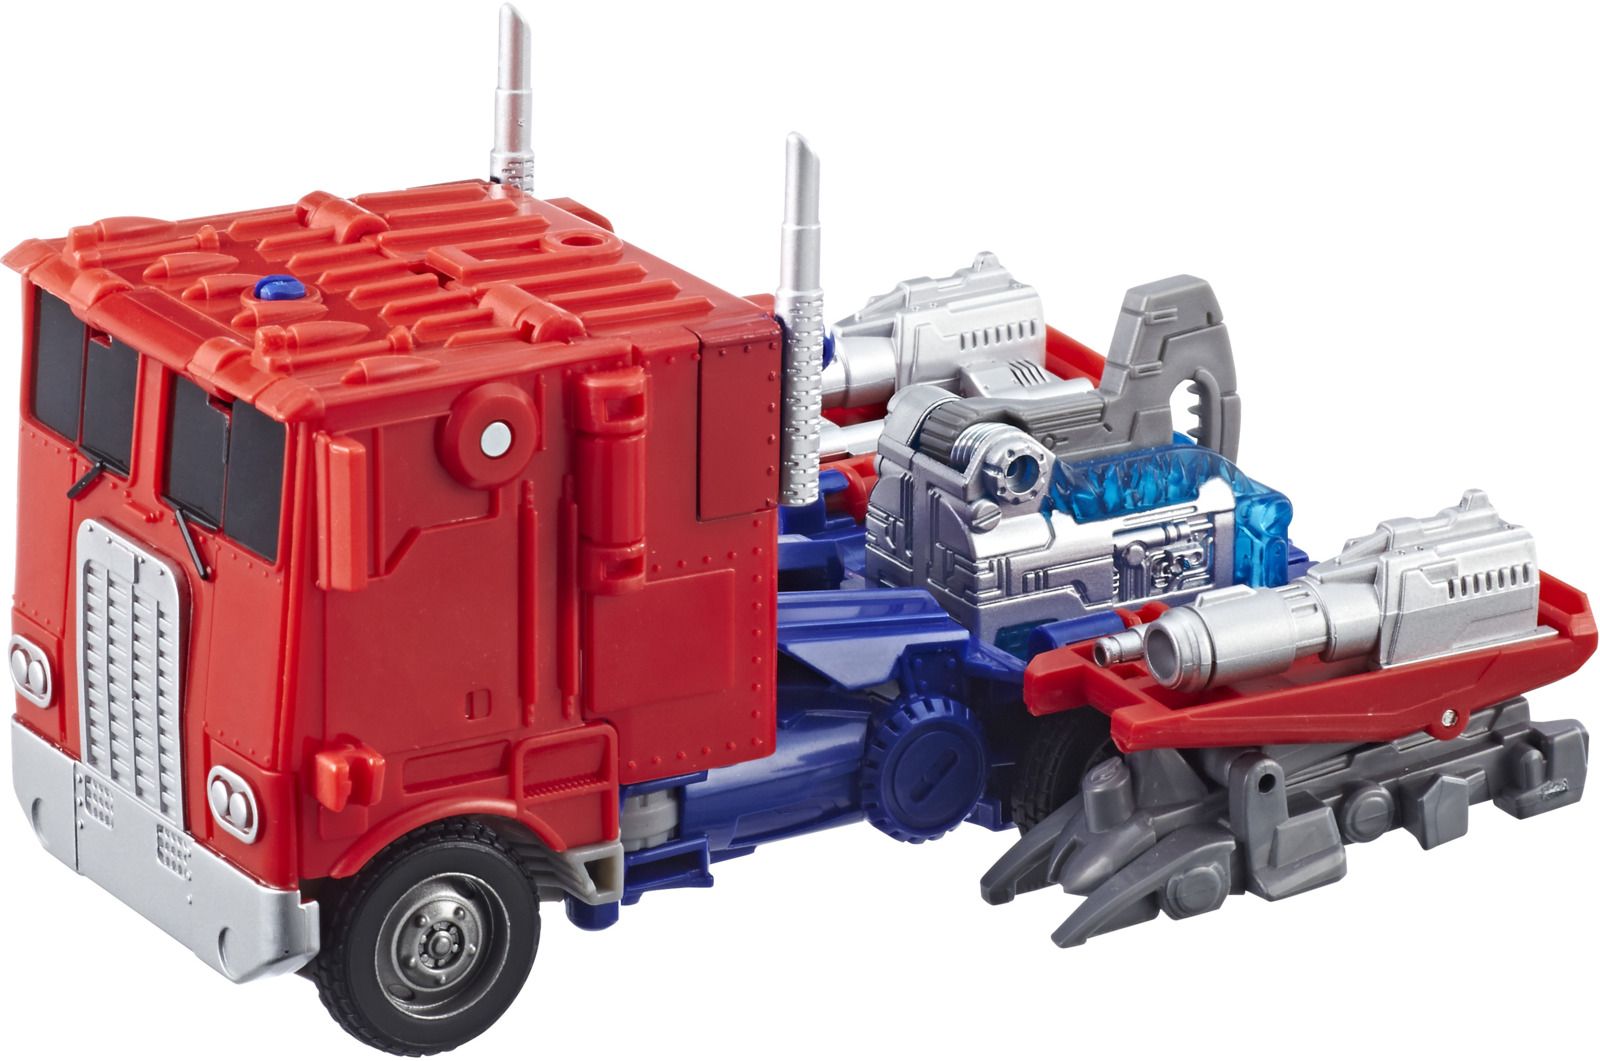  Transformers Energon Igniters Optimus Prime, E0700_0754